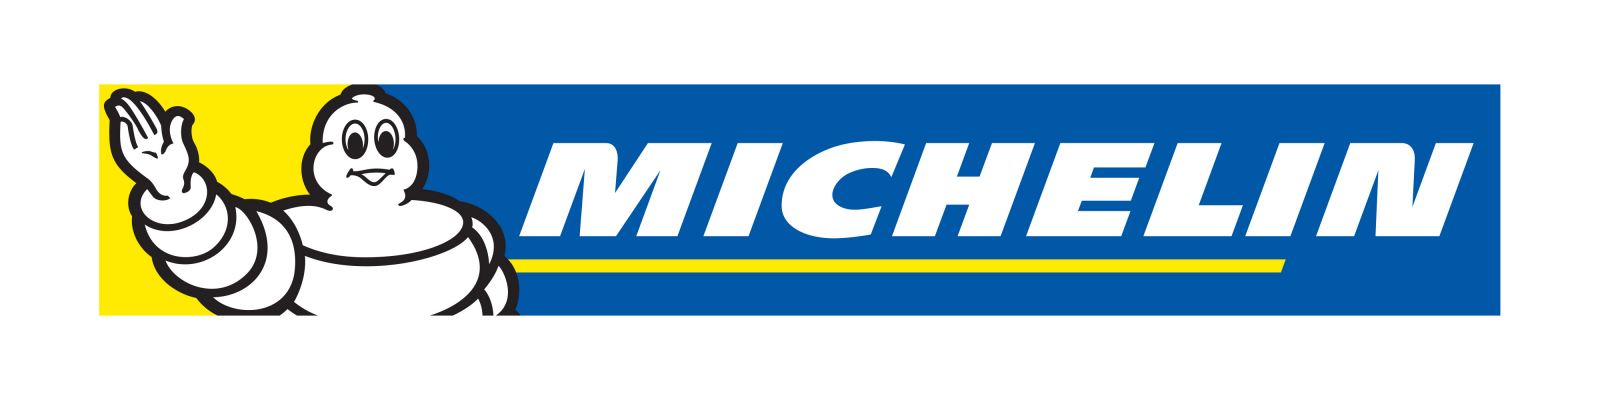 Michelin Anvelope Chisinau